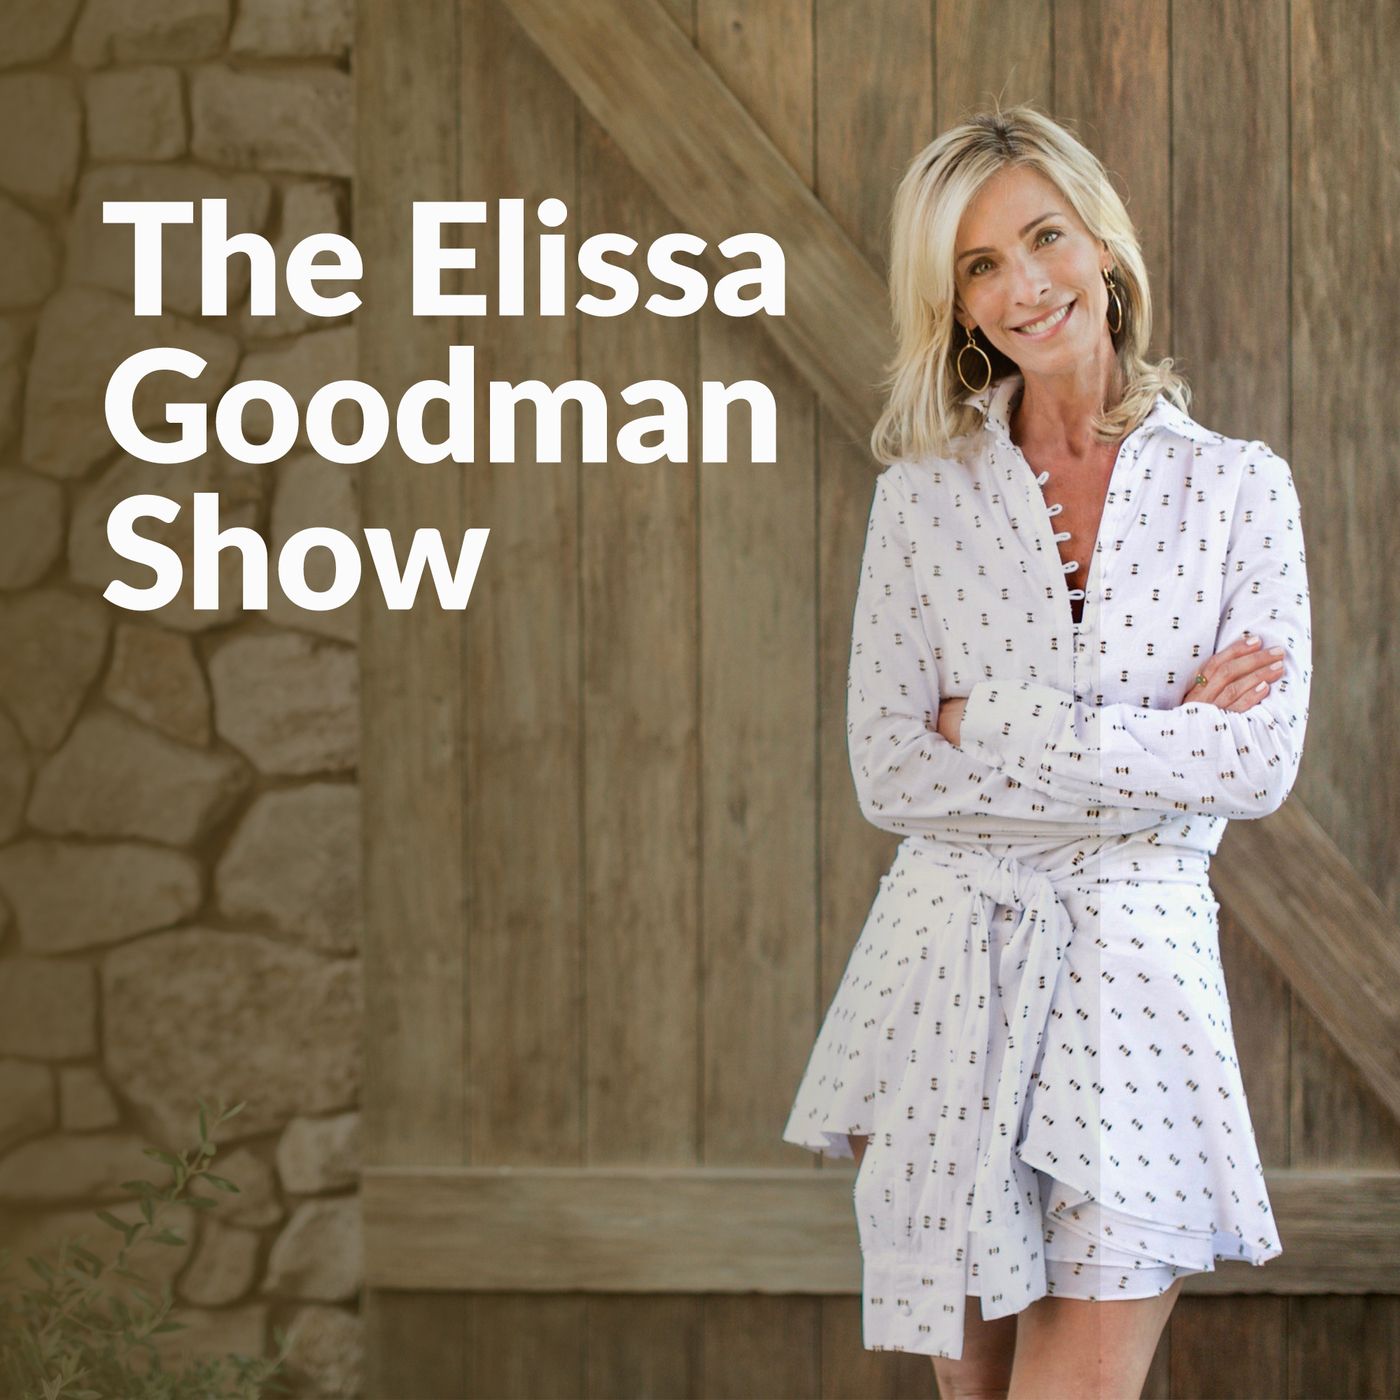 THE ELISSA GOODMAN SHOW